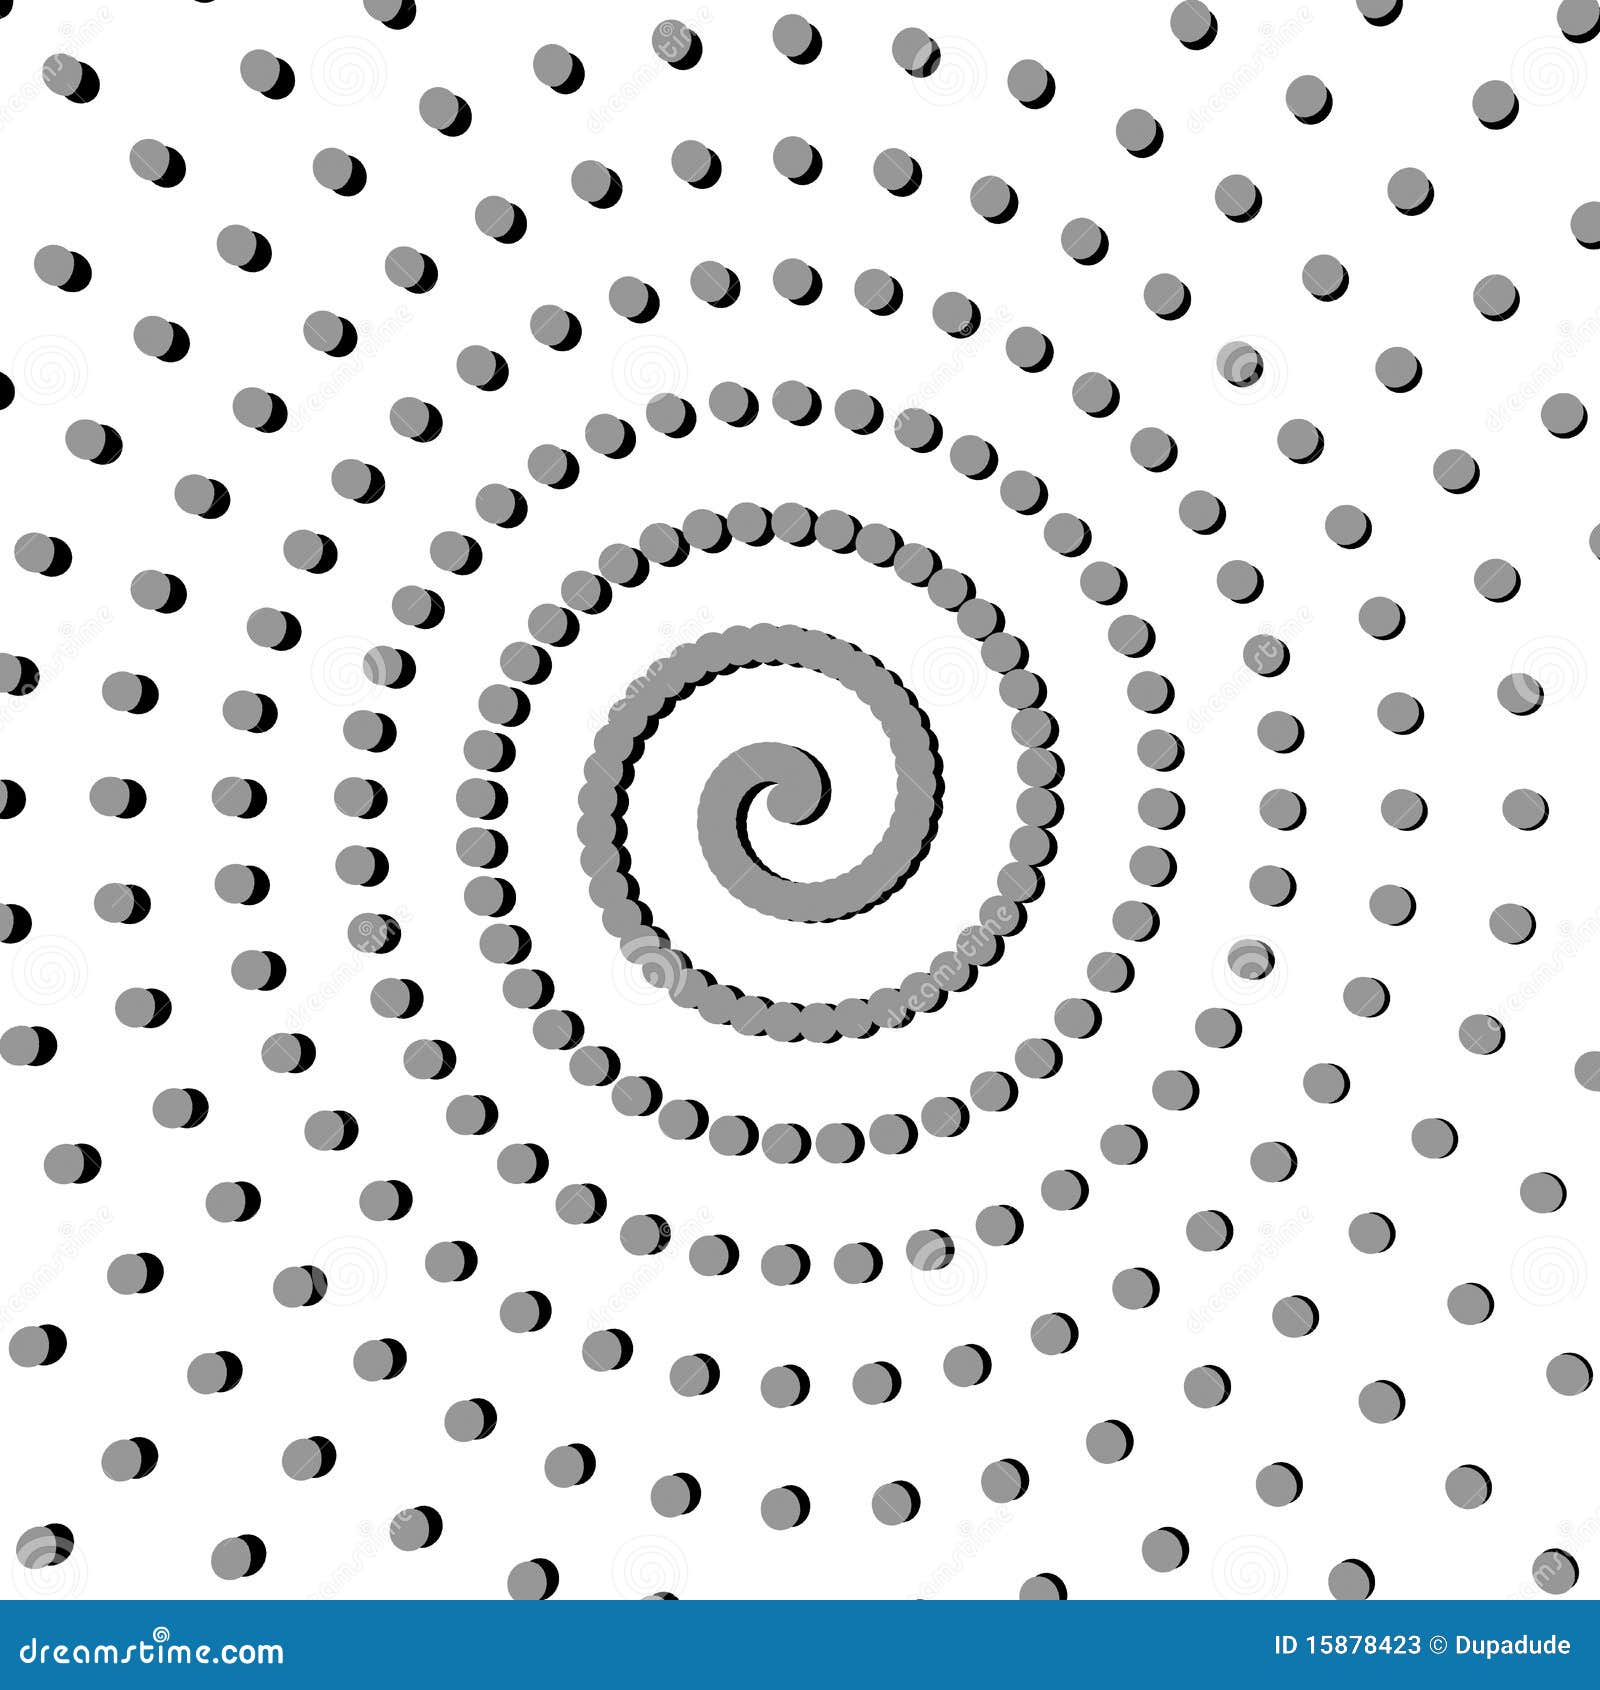 Black gray abstract spiral stock illustration. Illustration of gray ...